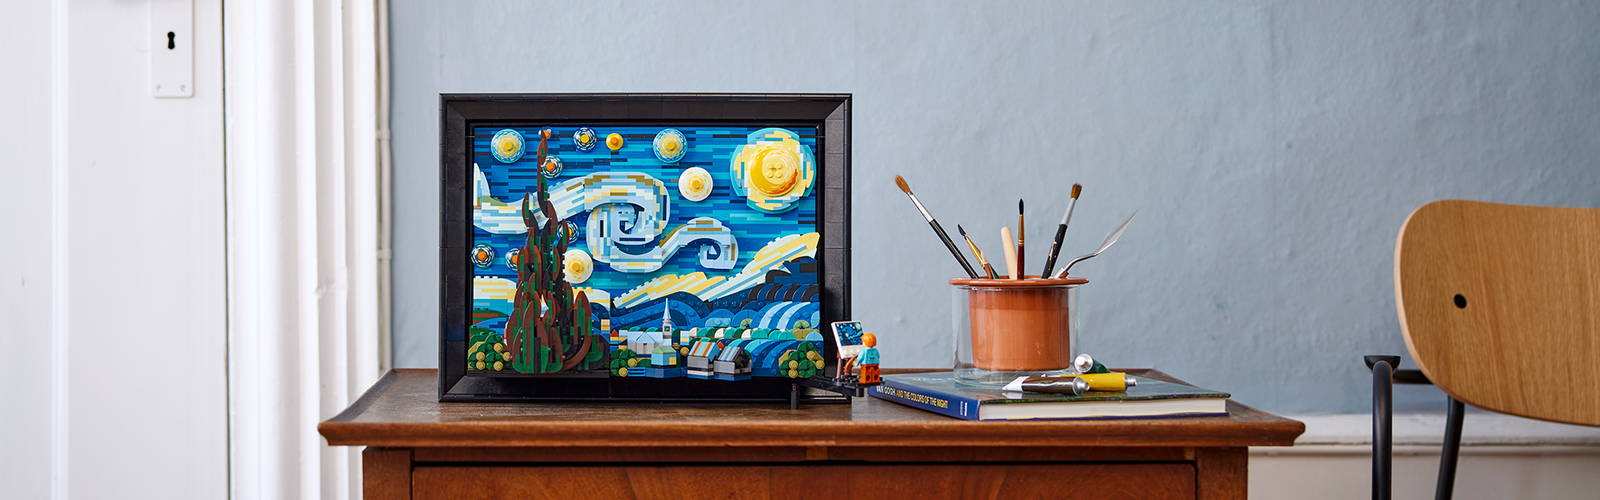 Incontriamo il fan-designer LEGO Ideas Vincent van Gogh - La notte